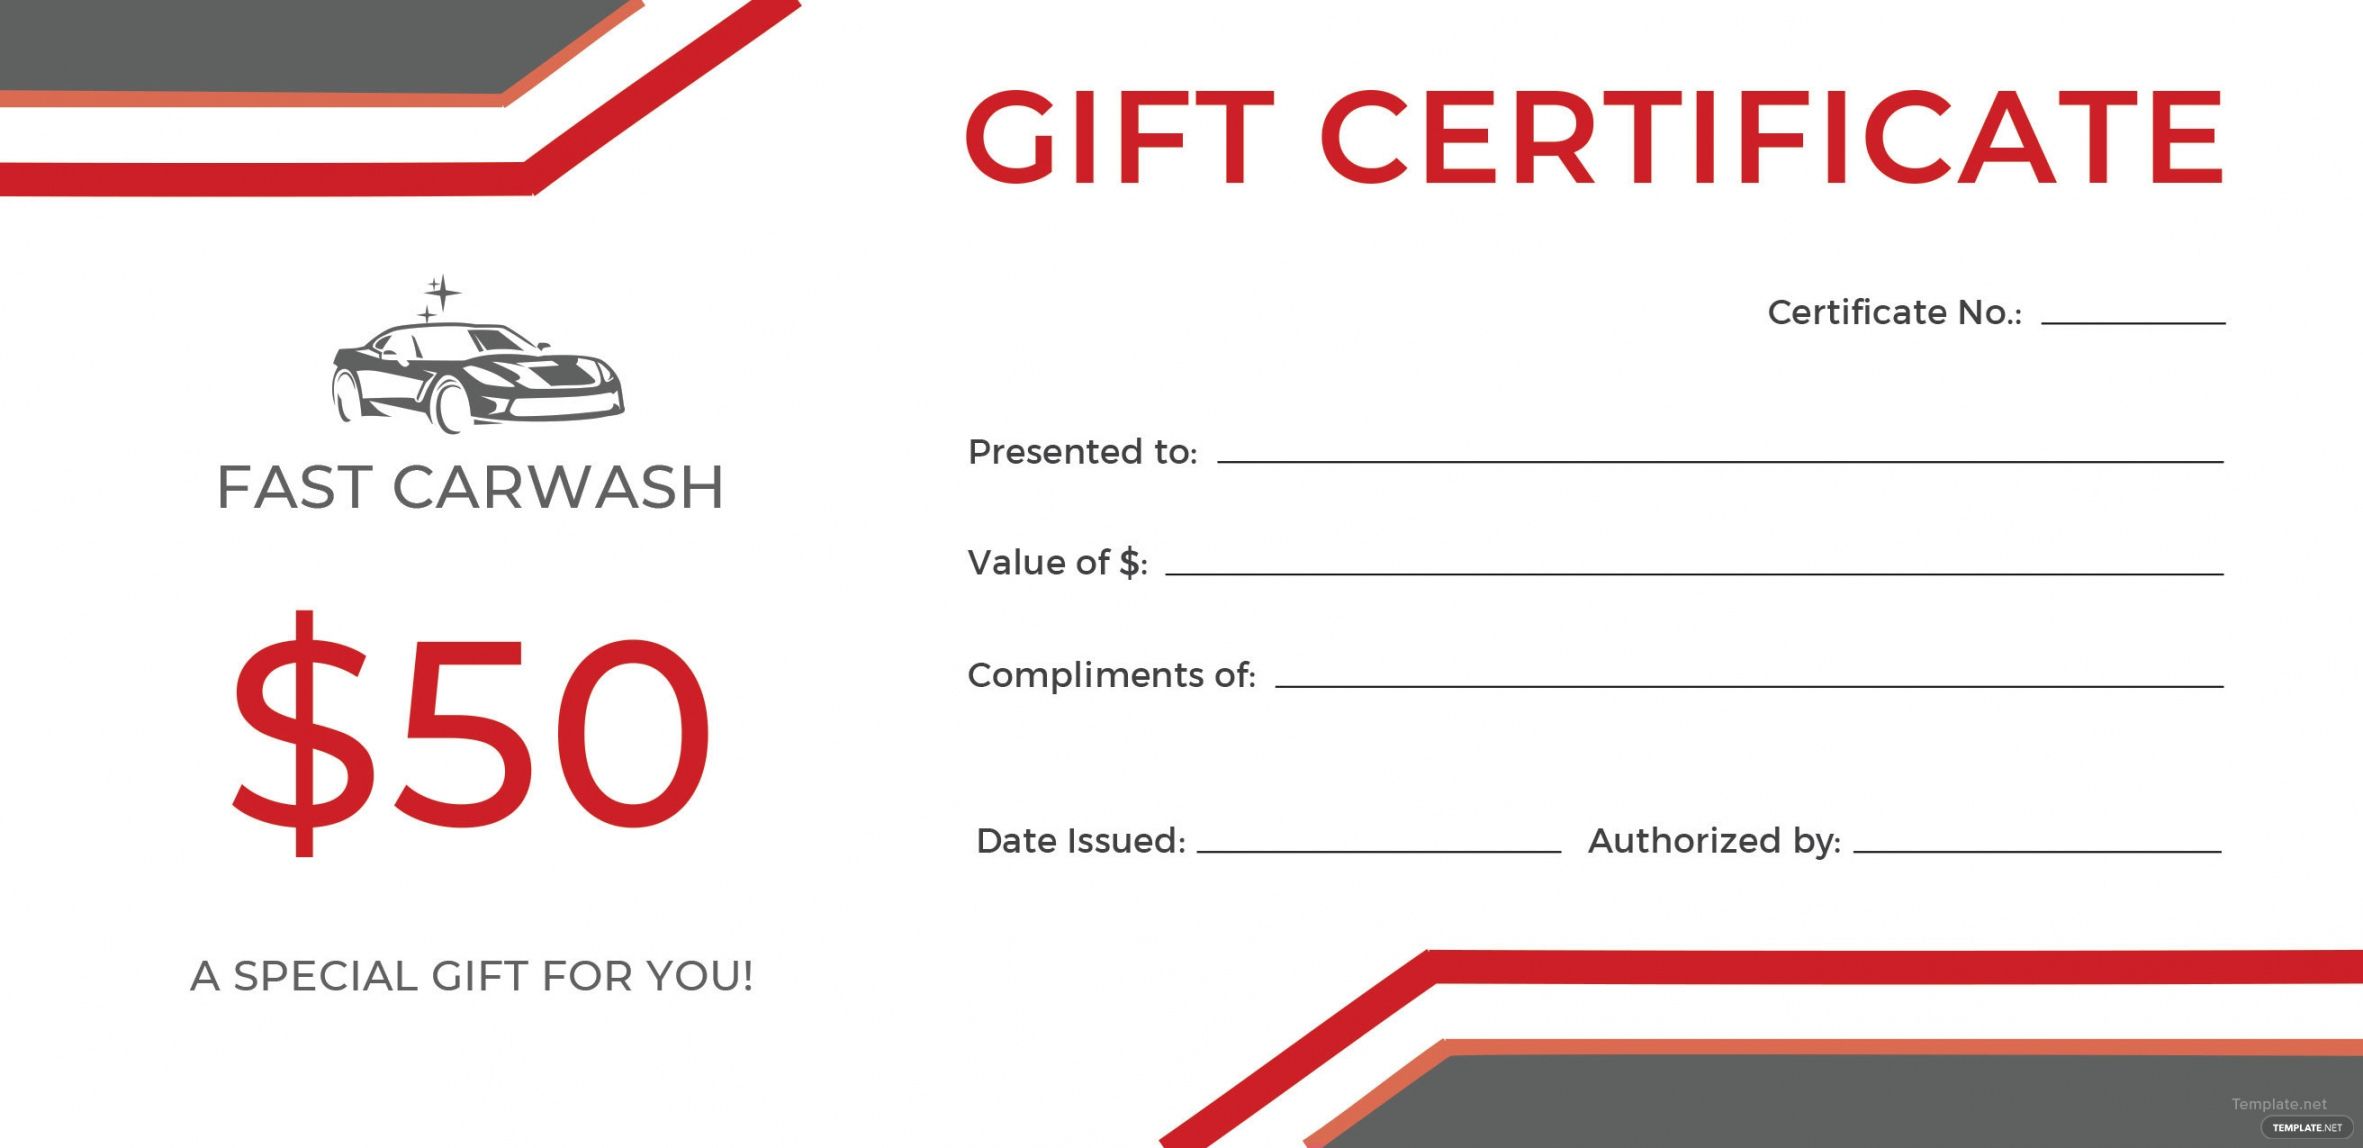 car-wash-gift-certificate-template-emetonlineblog